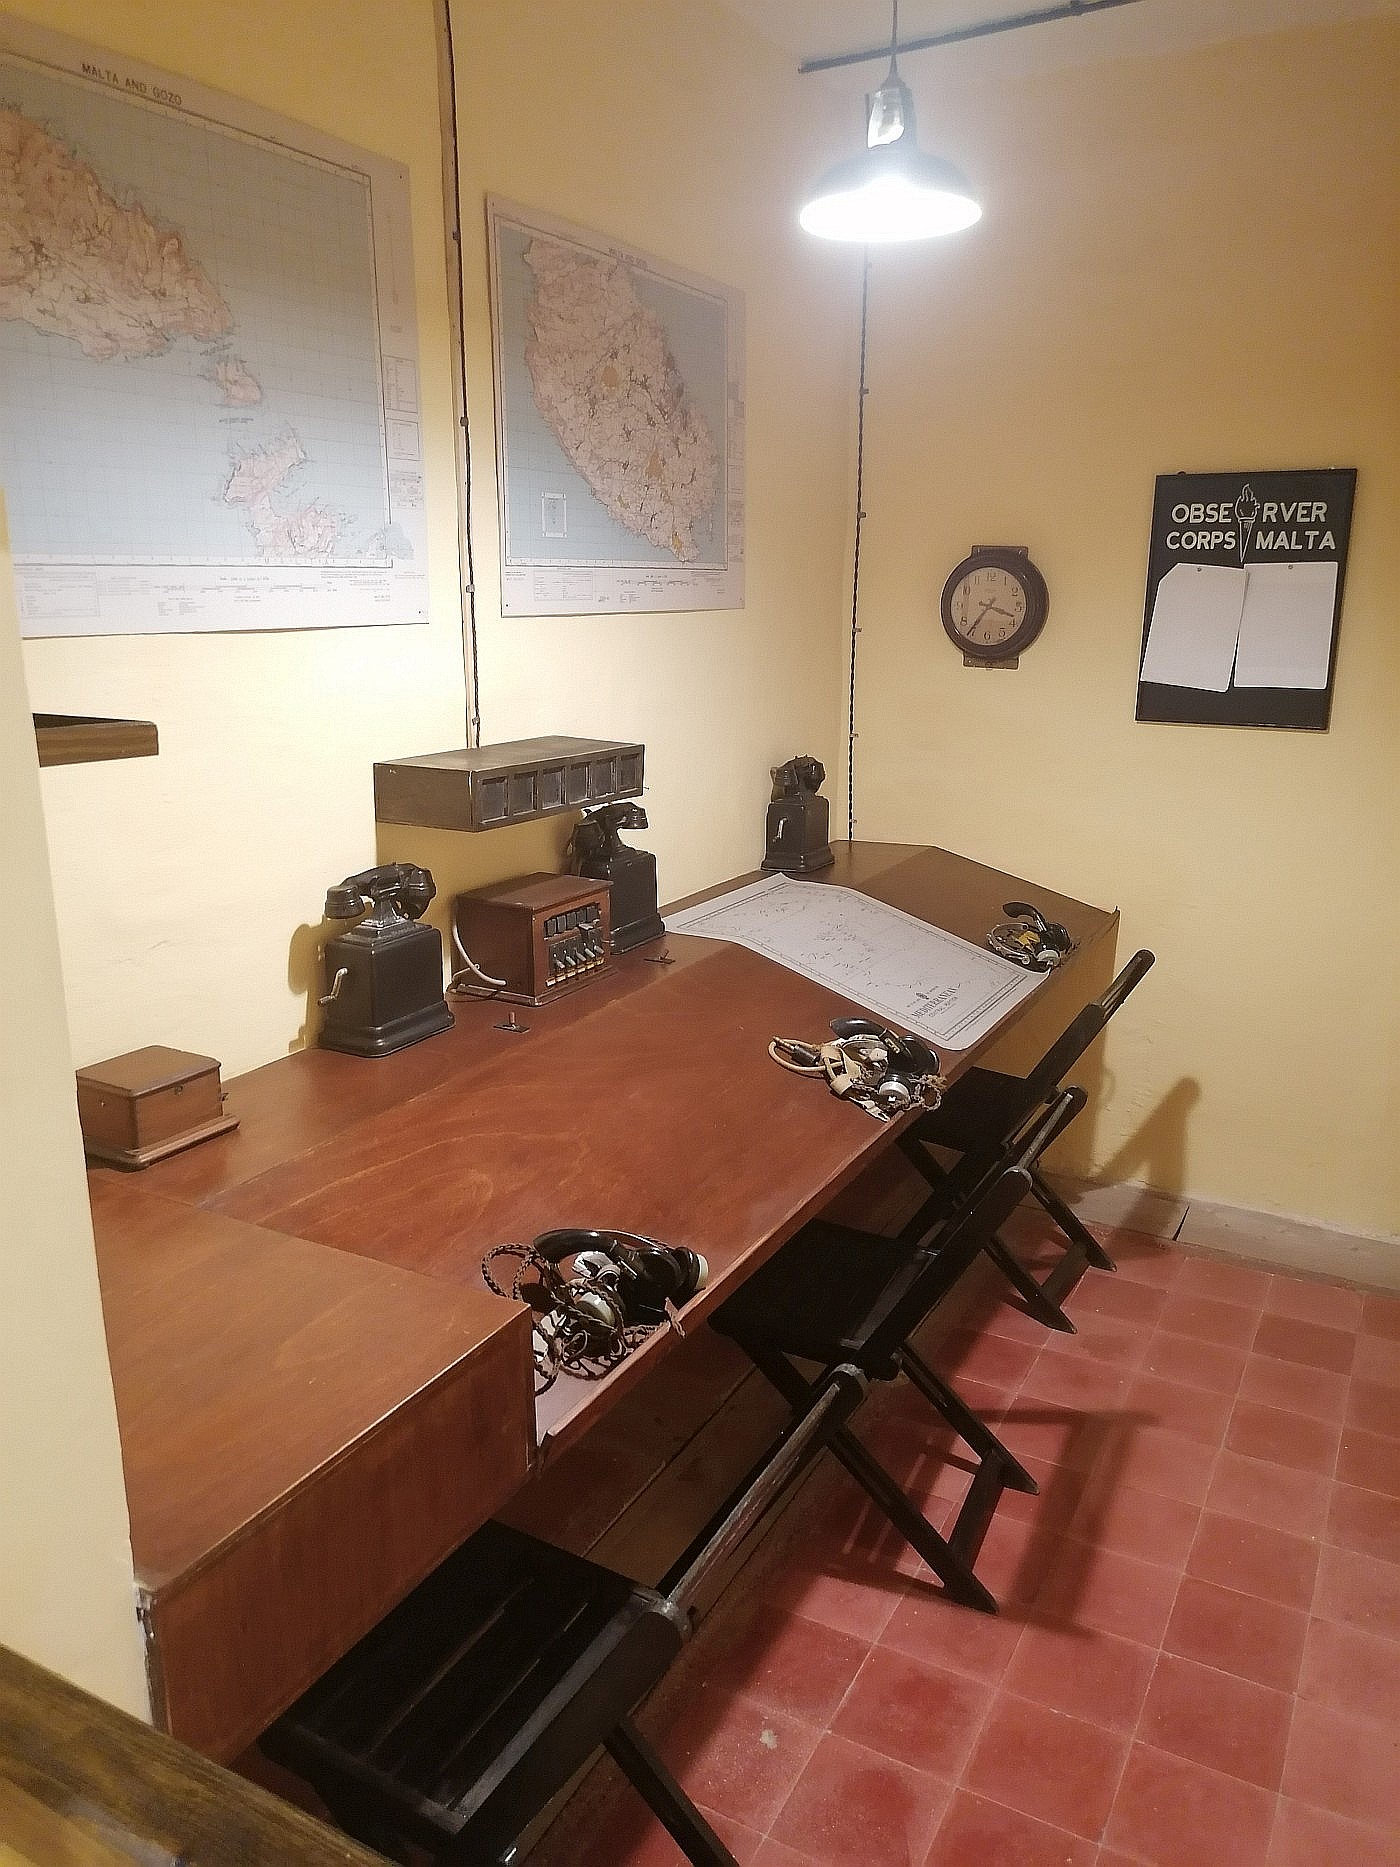 Lascaris War Rooms